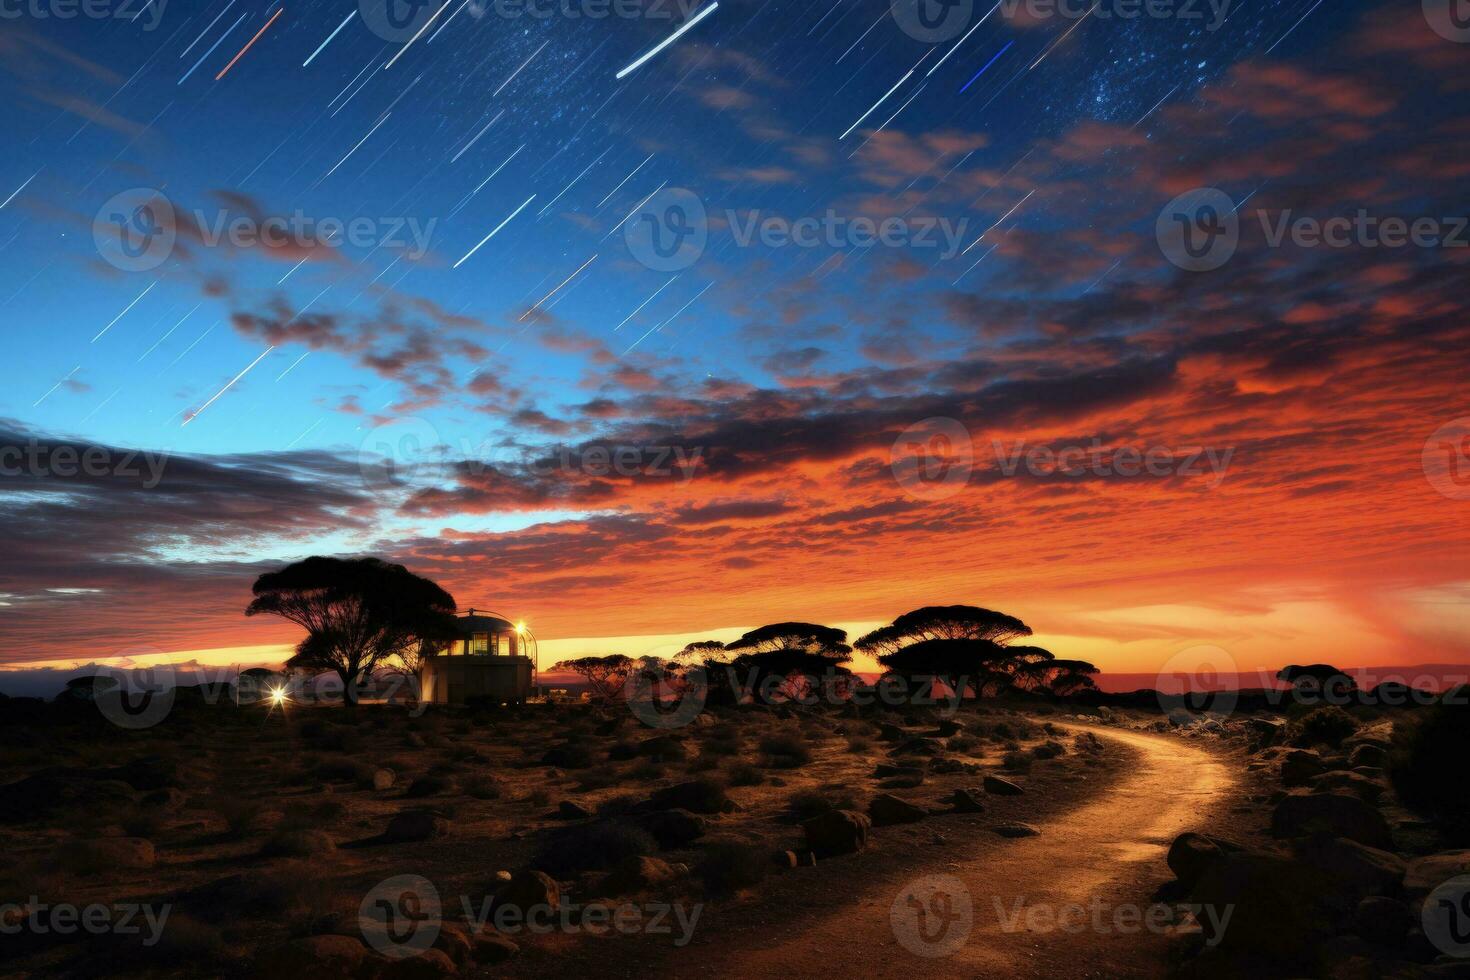 Milky Ways celestial grandeur captivates observers in Dark Sky Sanctuaries photo